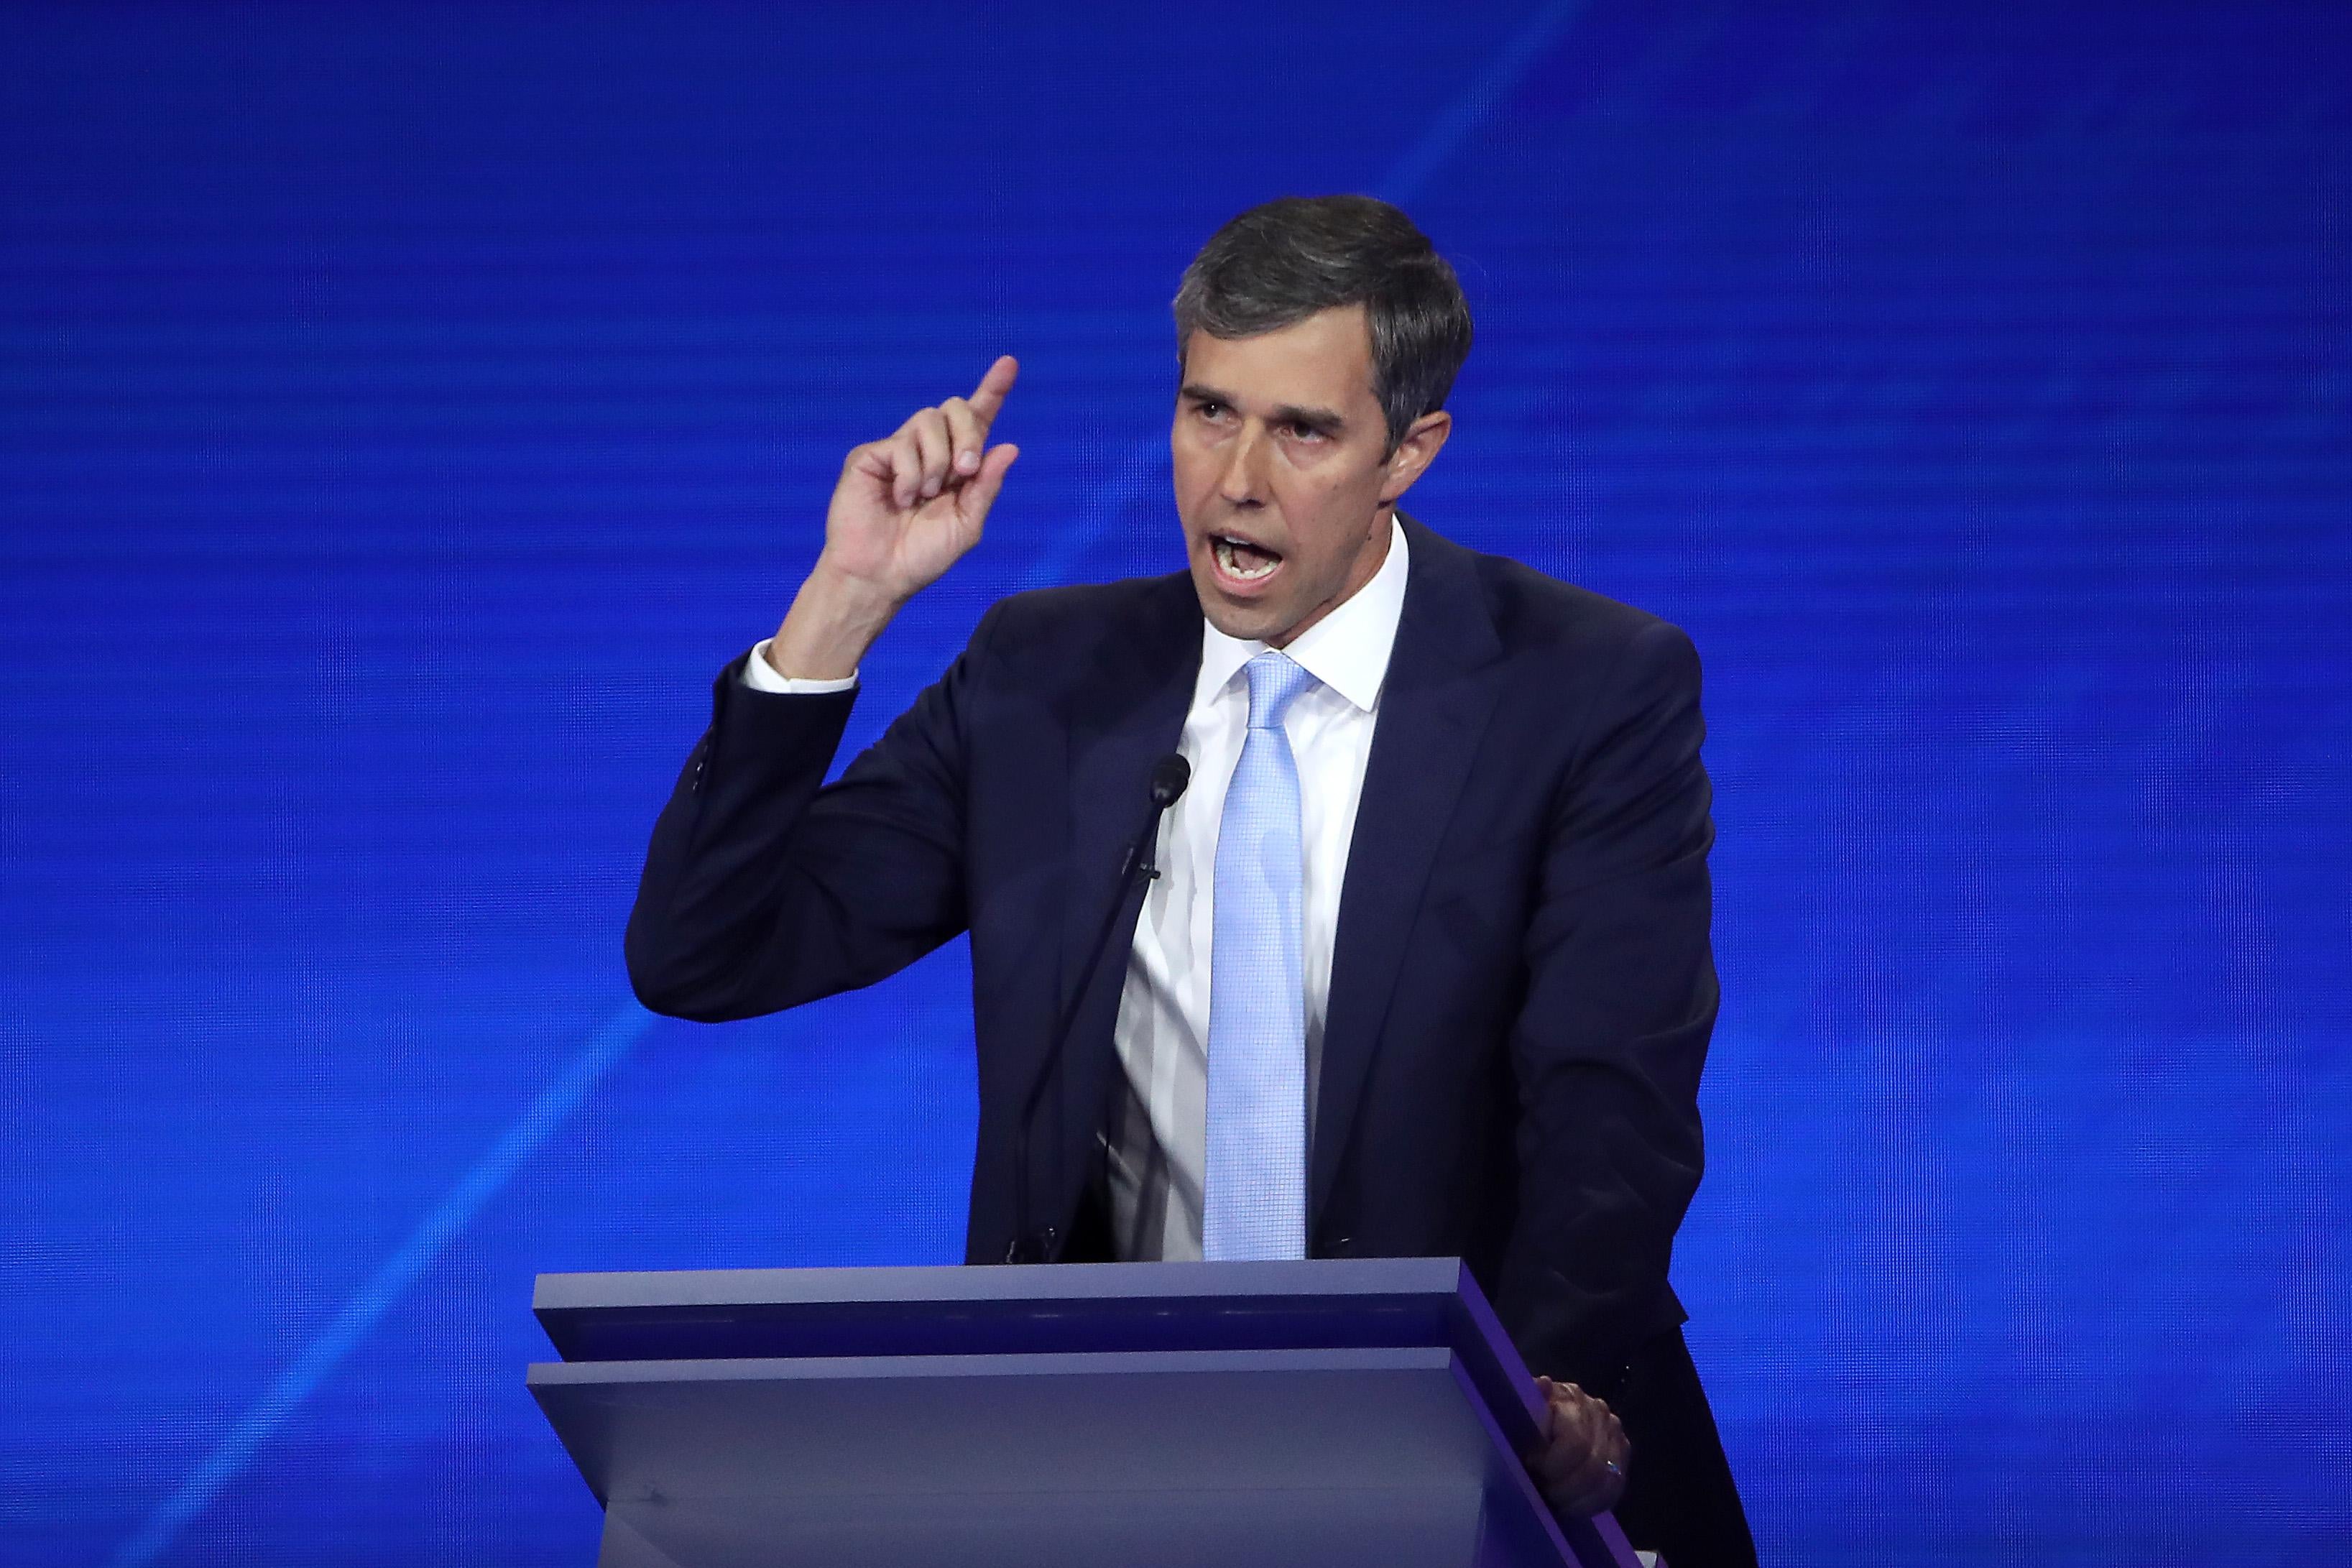 Beto O'Rourke raises his hand as he speaks during the debate.